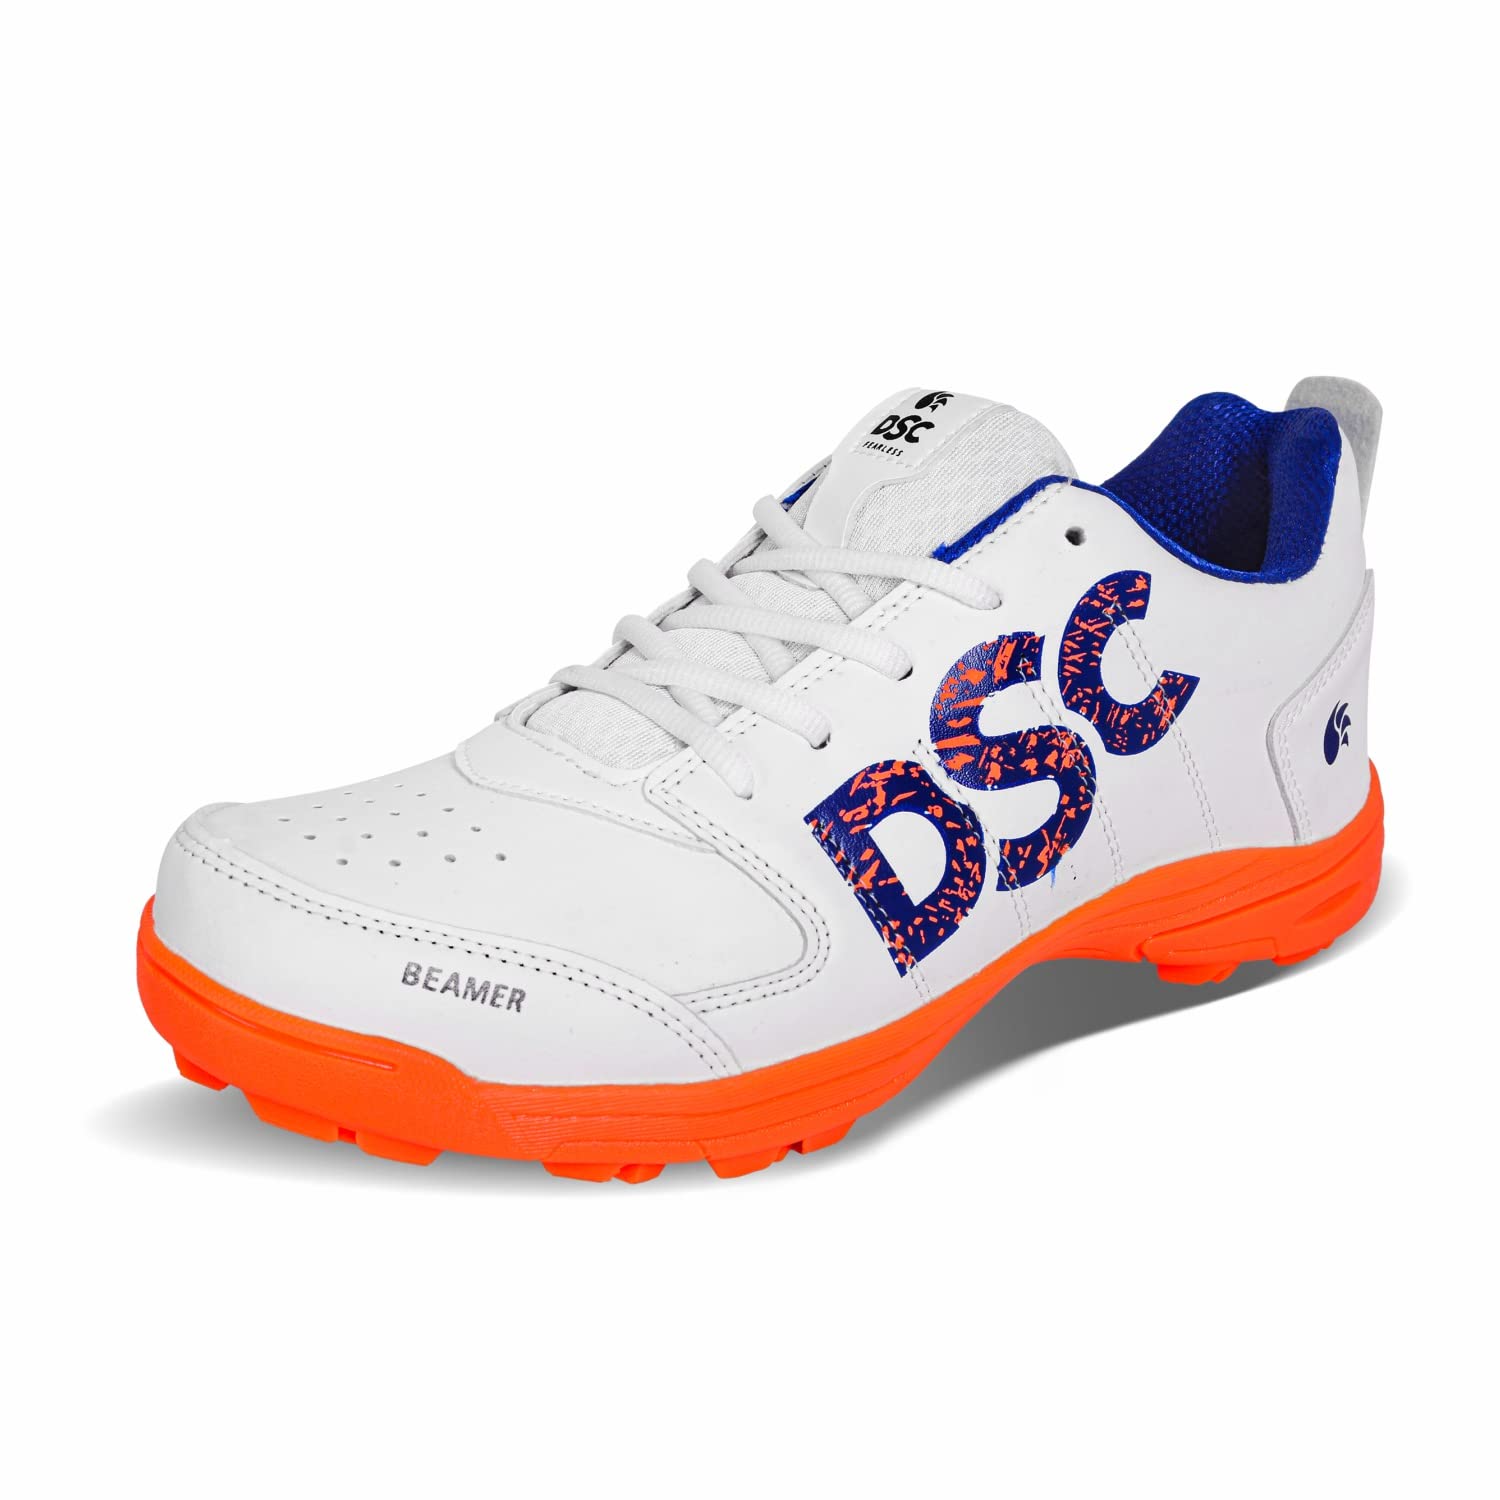 DSC 1502457 Size 8US Fluro Orange-White BEAMER CRICKET SHOES